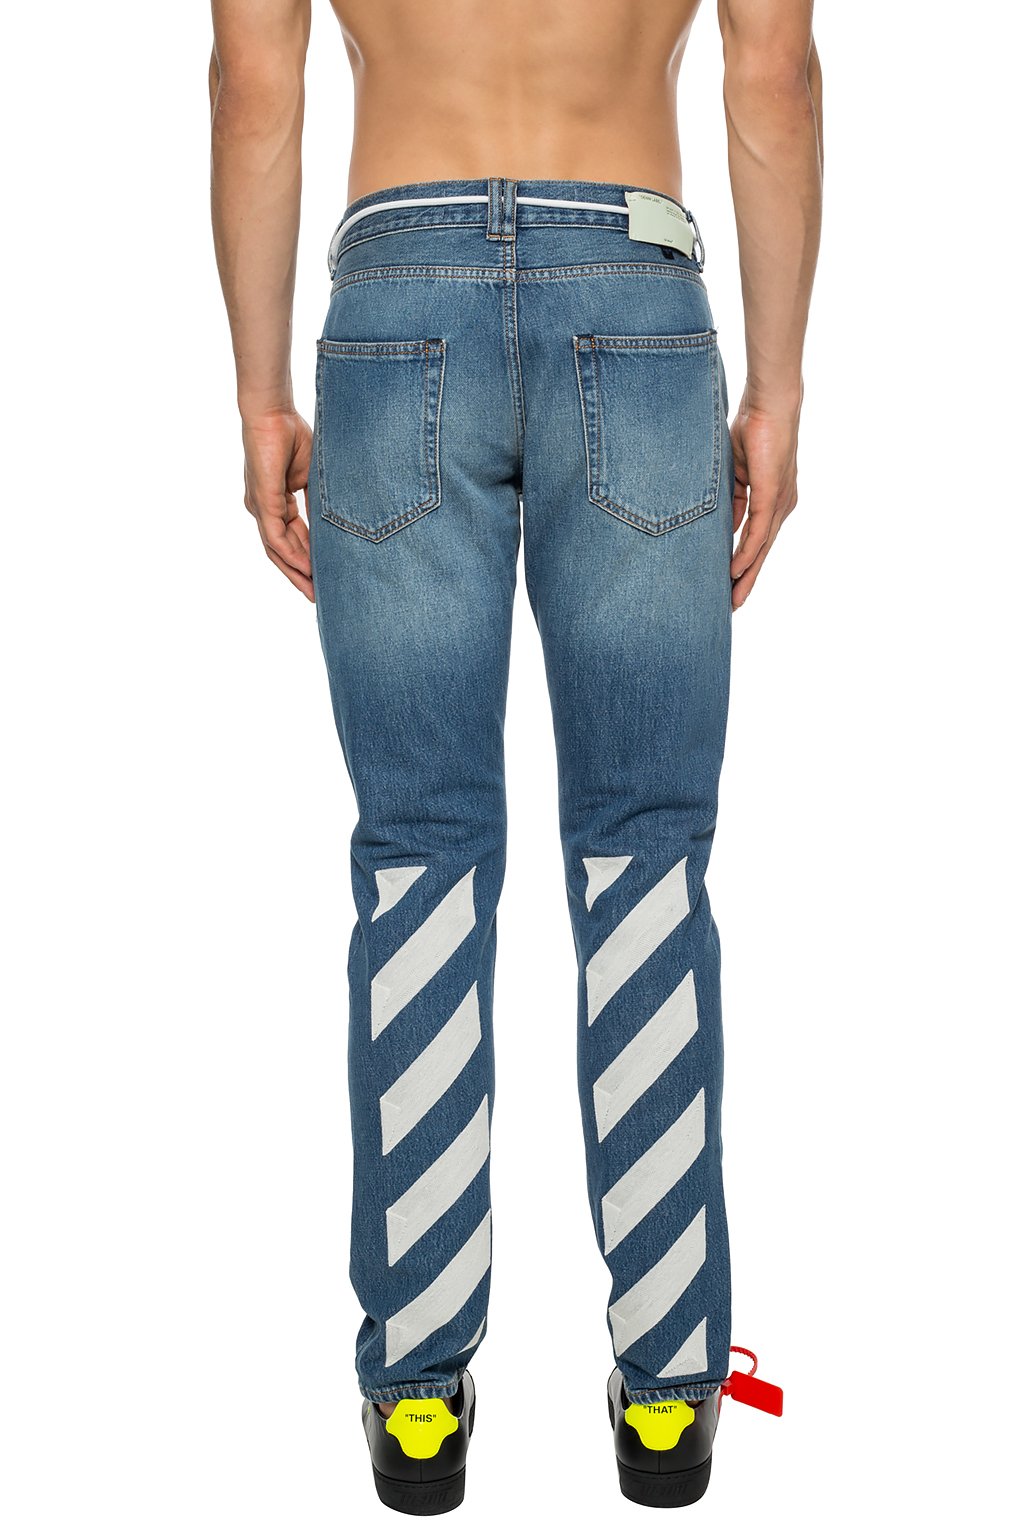 Off-White Striped jeans | Men's Clothing Vitkac